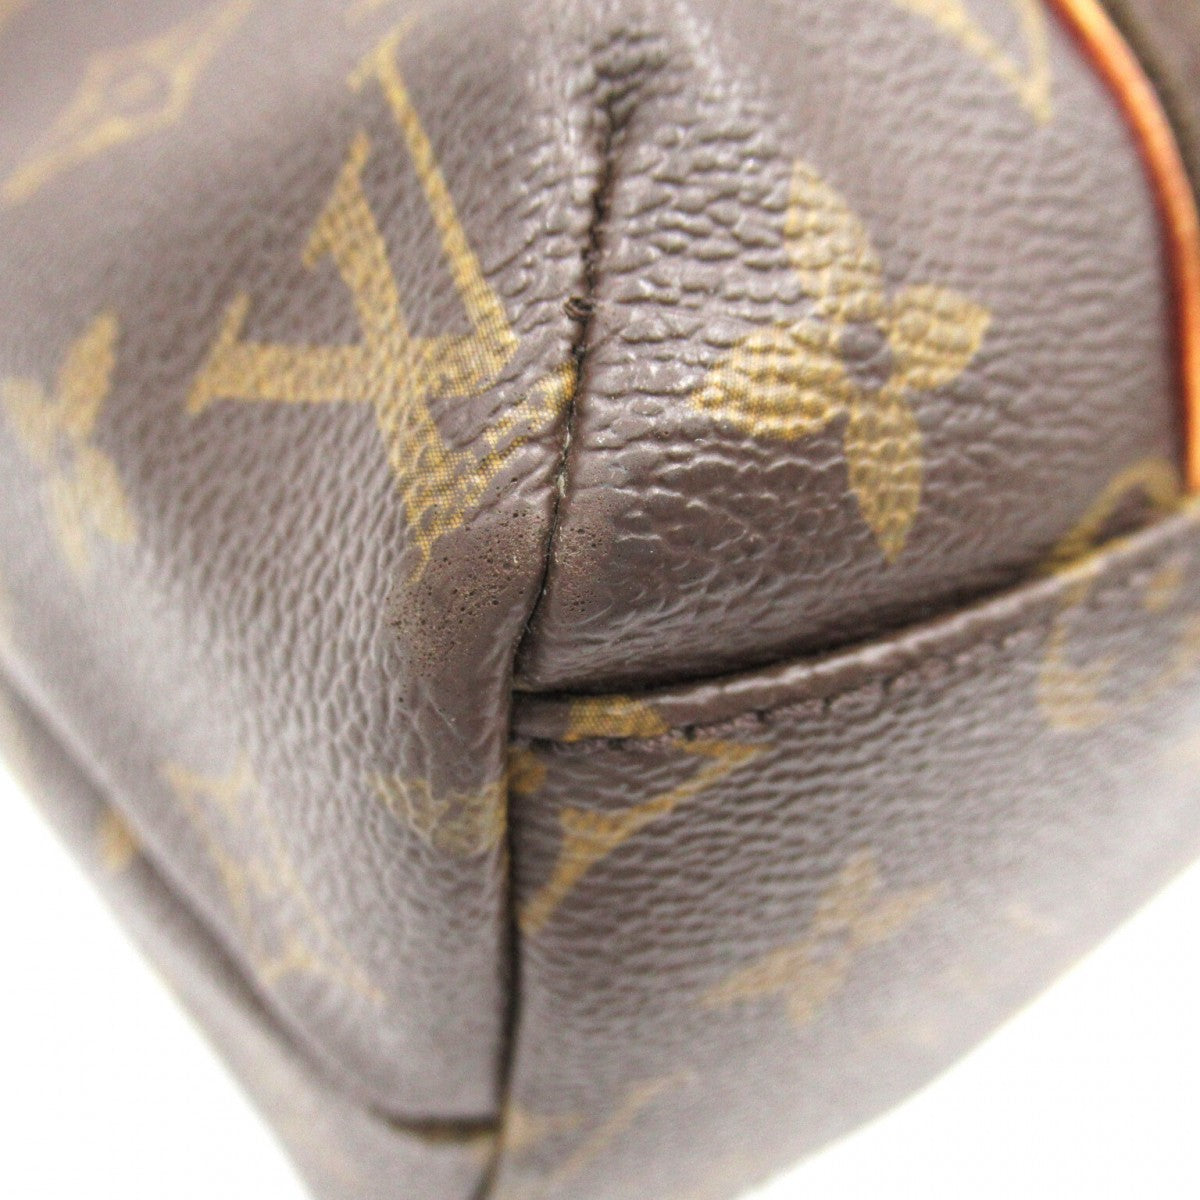 Authentic Louis Vuitton Monogram Cabas Beaubourg Tote Bag M53013